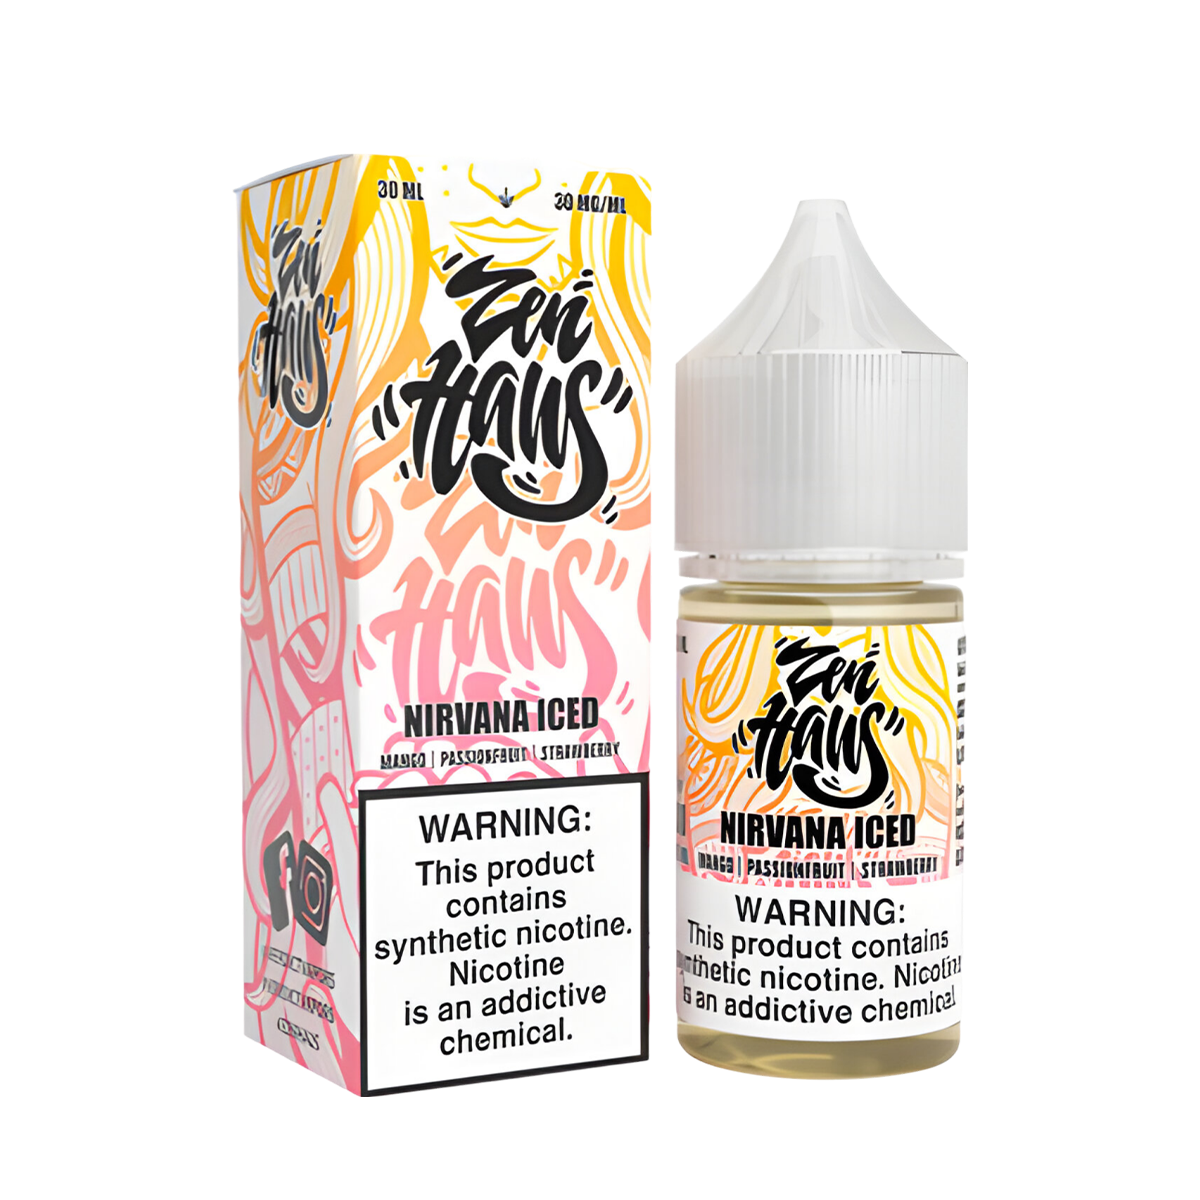 Zen Haus Salt Nicotine Vape Juice 30 Mg 30 Ml Nirvana Ice (Mango Passionfruit Strawberry)